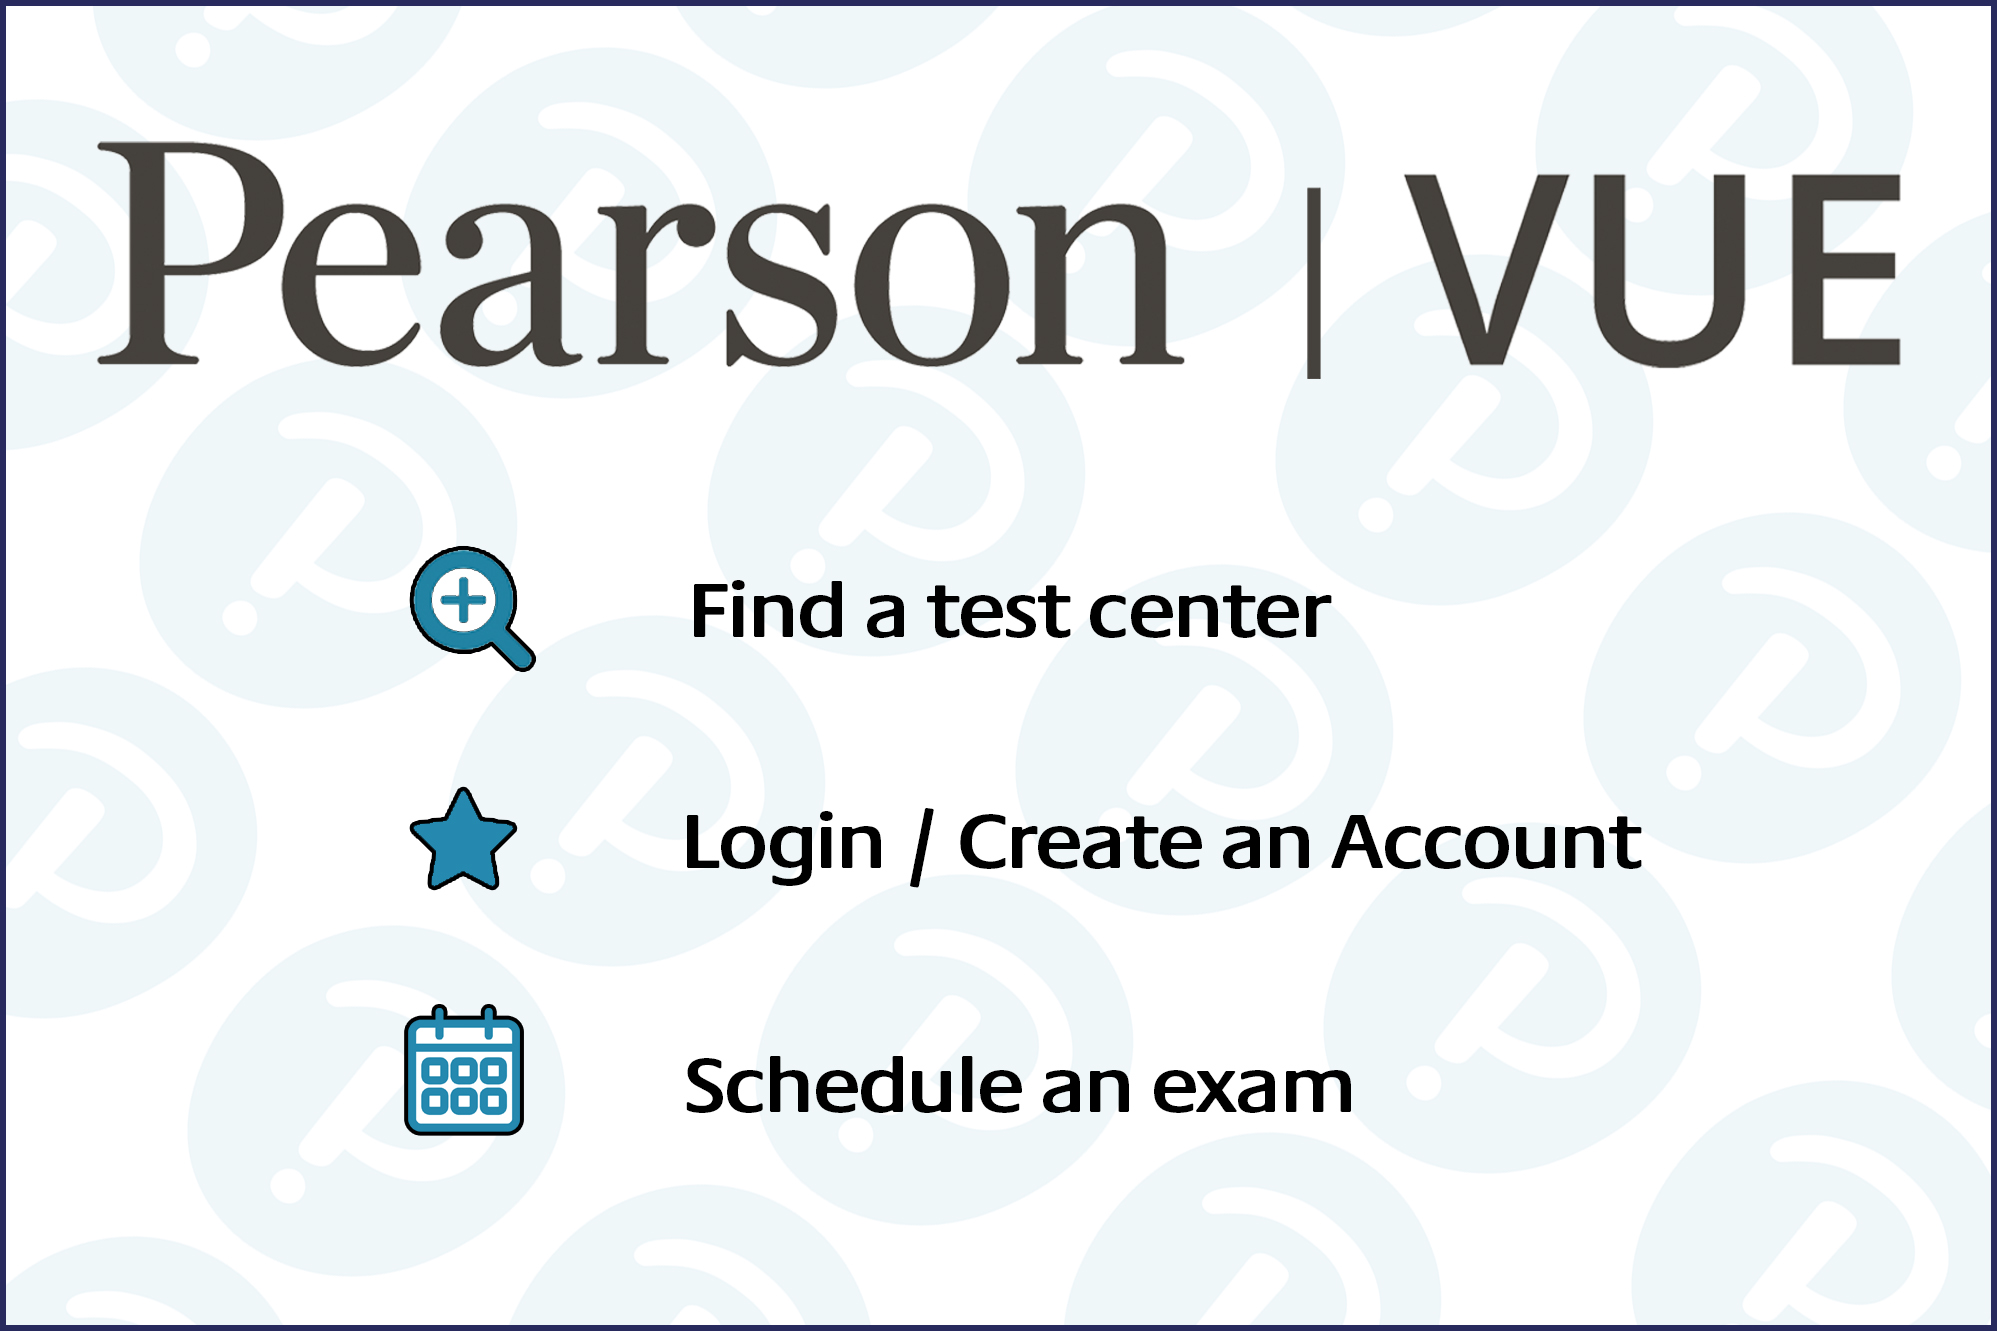 Pearson | VUE Find a test center Login / Create an Account Schedule an exam